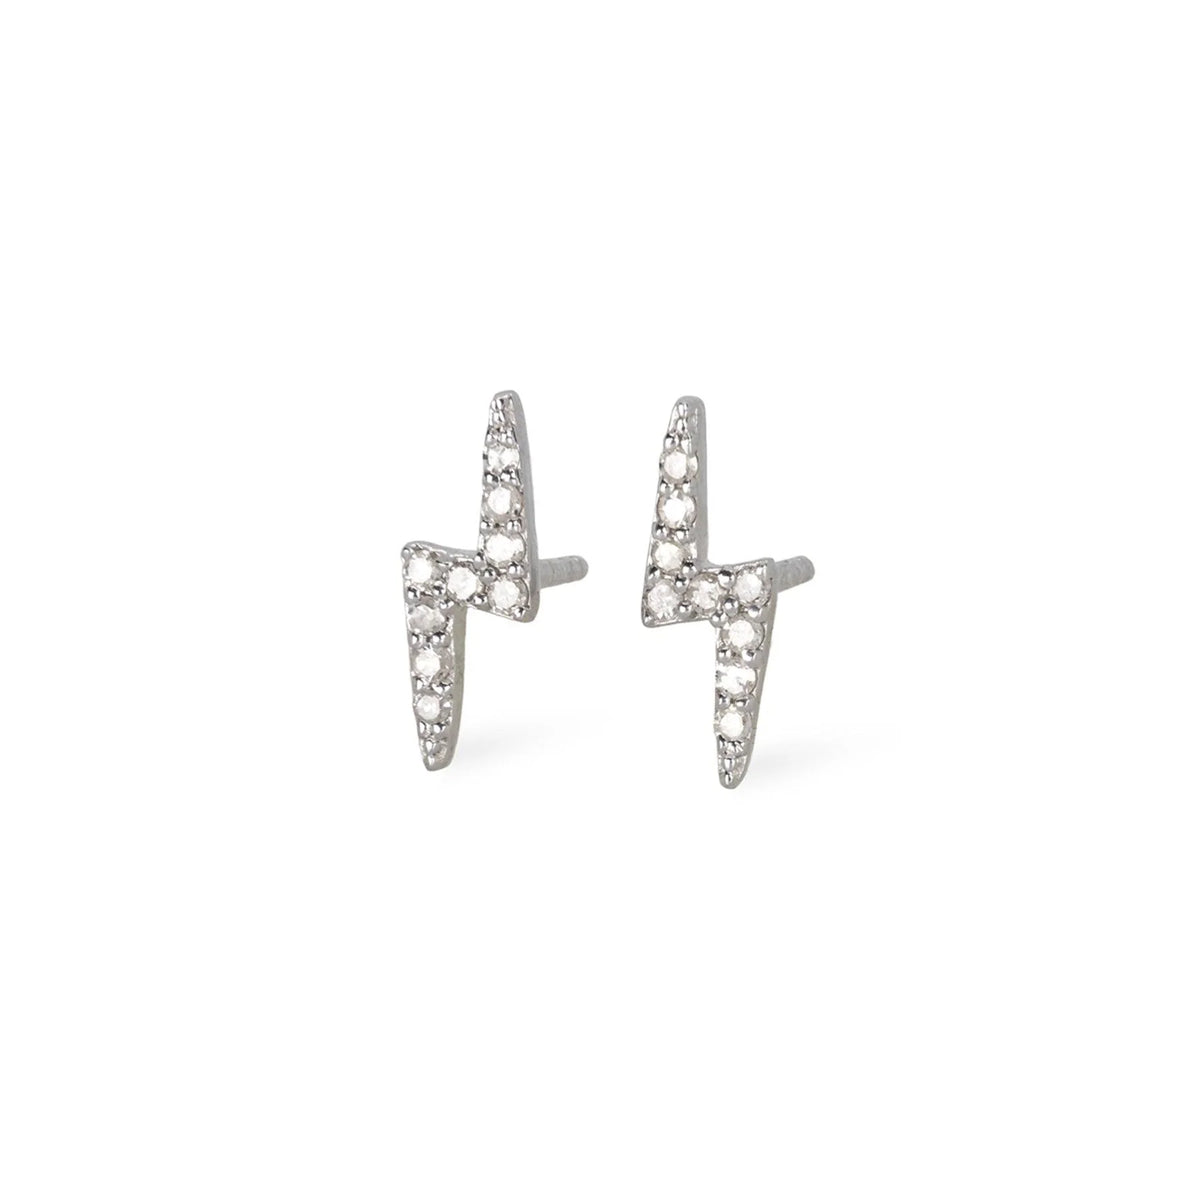 Small lightening bolt stud earrings with diamond detail